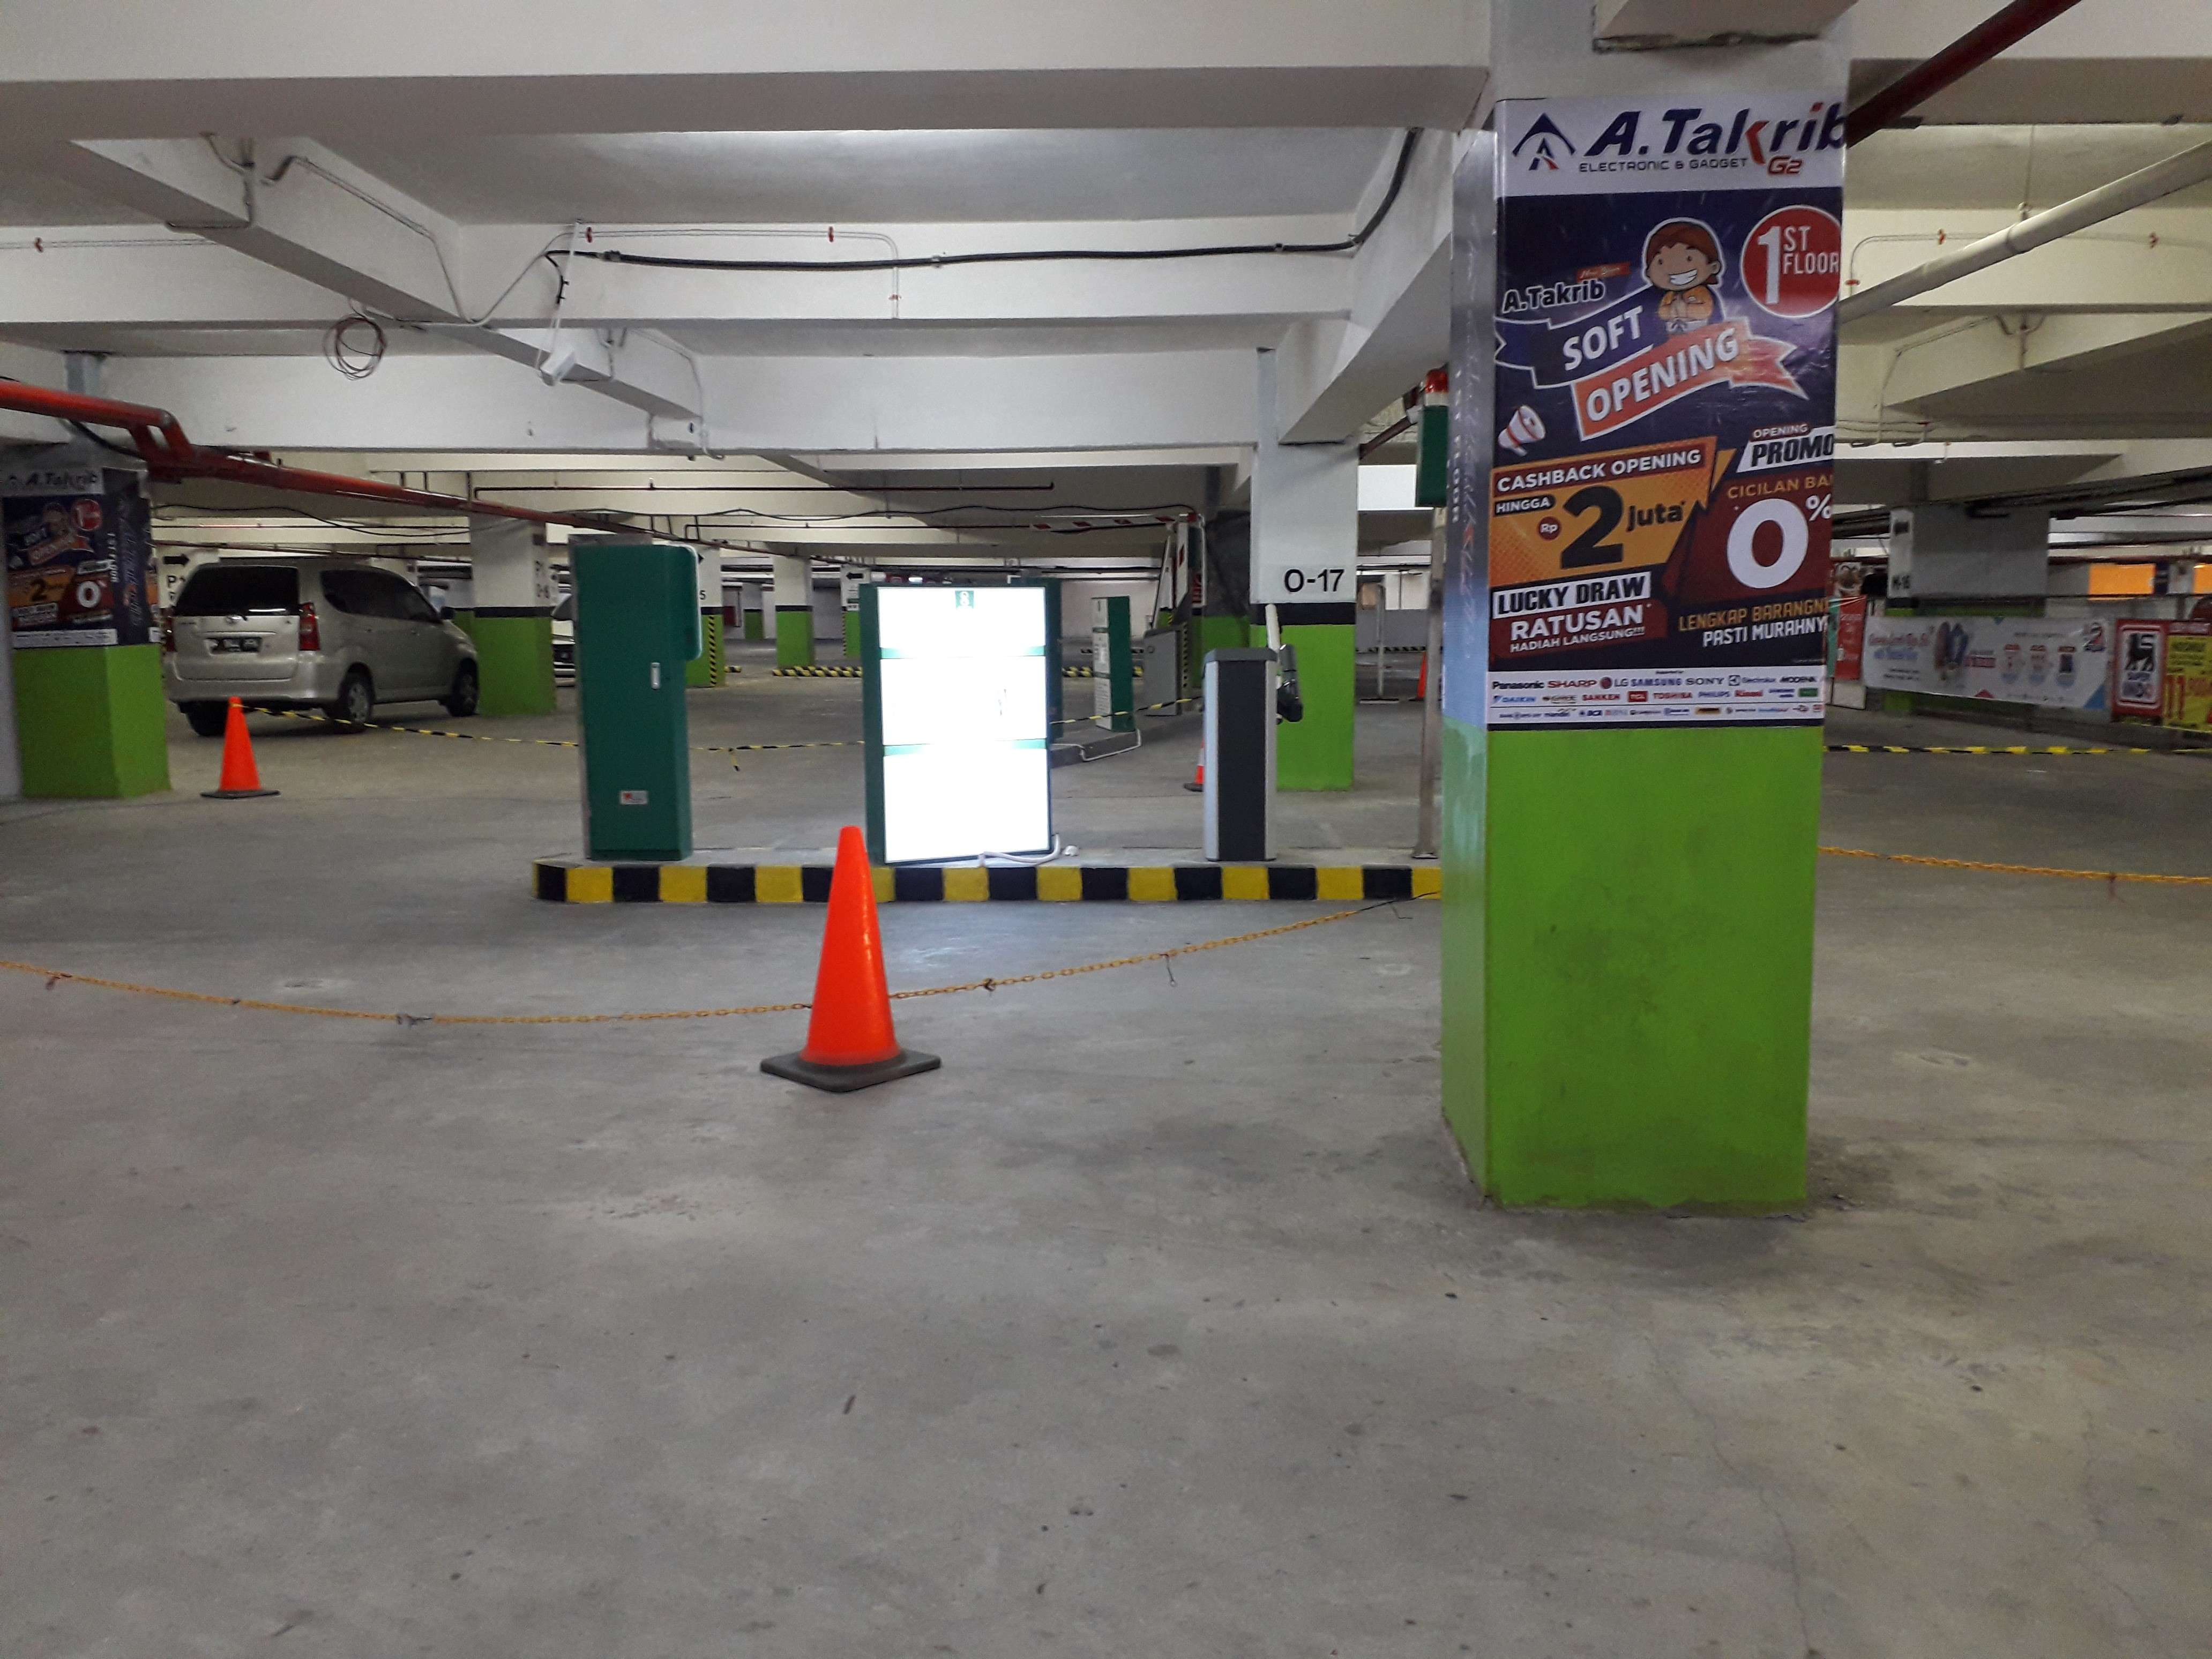 Area parkir Sleman City Hall  (c) Siti Hanifah/Travelingyuk